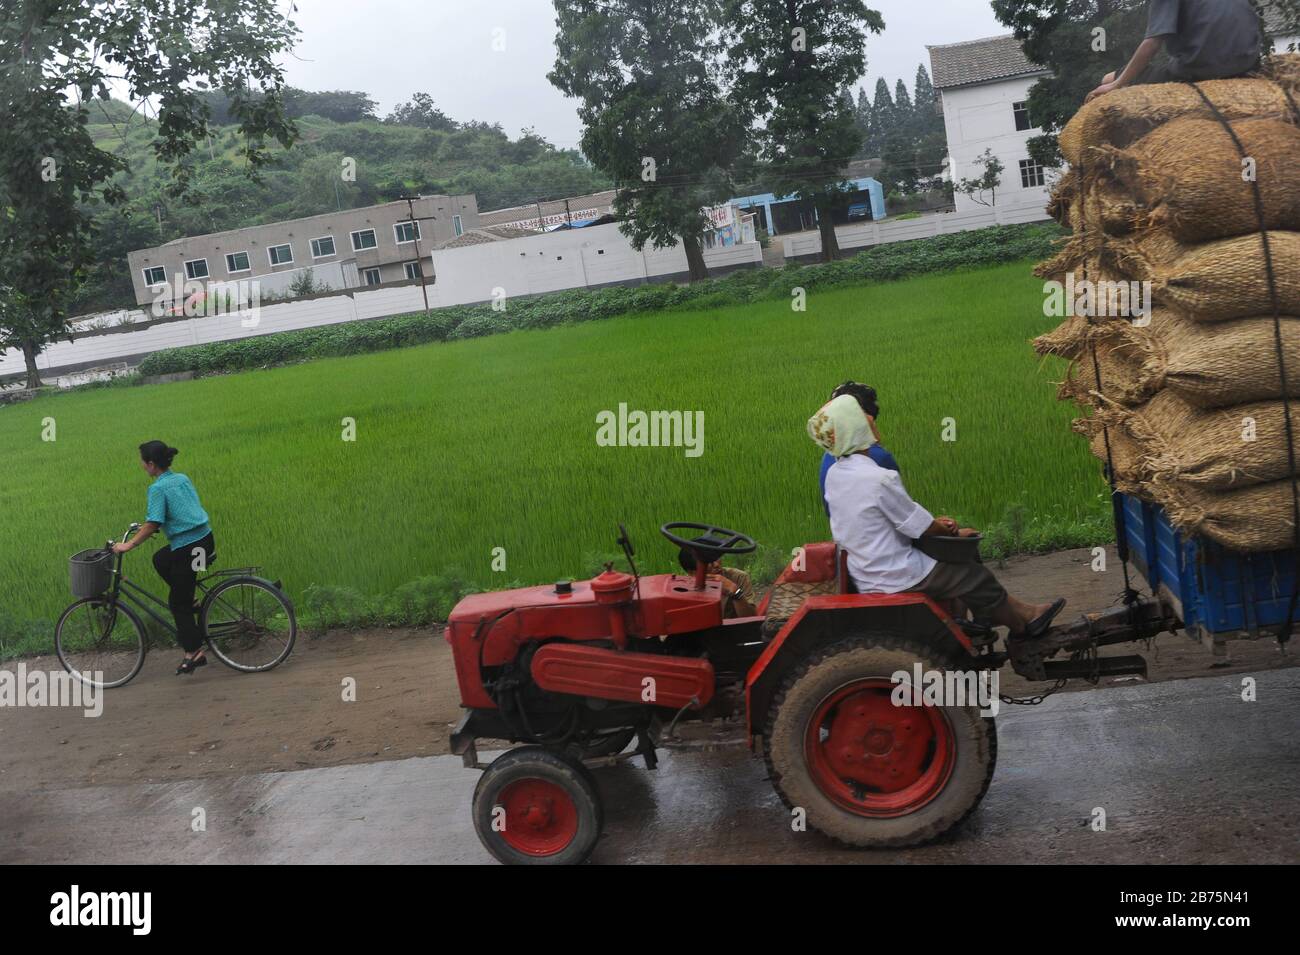 12.08.2012, Wonsan, Nordkorea, Asien - Street-Szene mit Traktor im Kolkhoz Chonsam nahe der Stadt Wonsan. [Automatisierte Übersetzung] Stockfoto